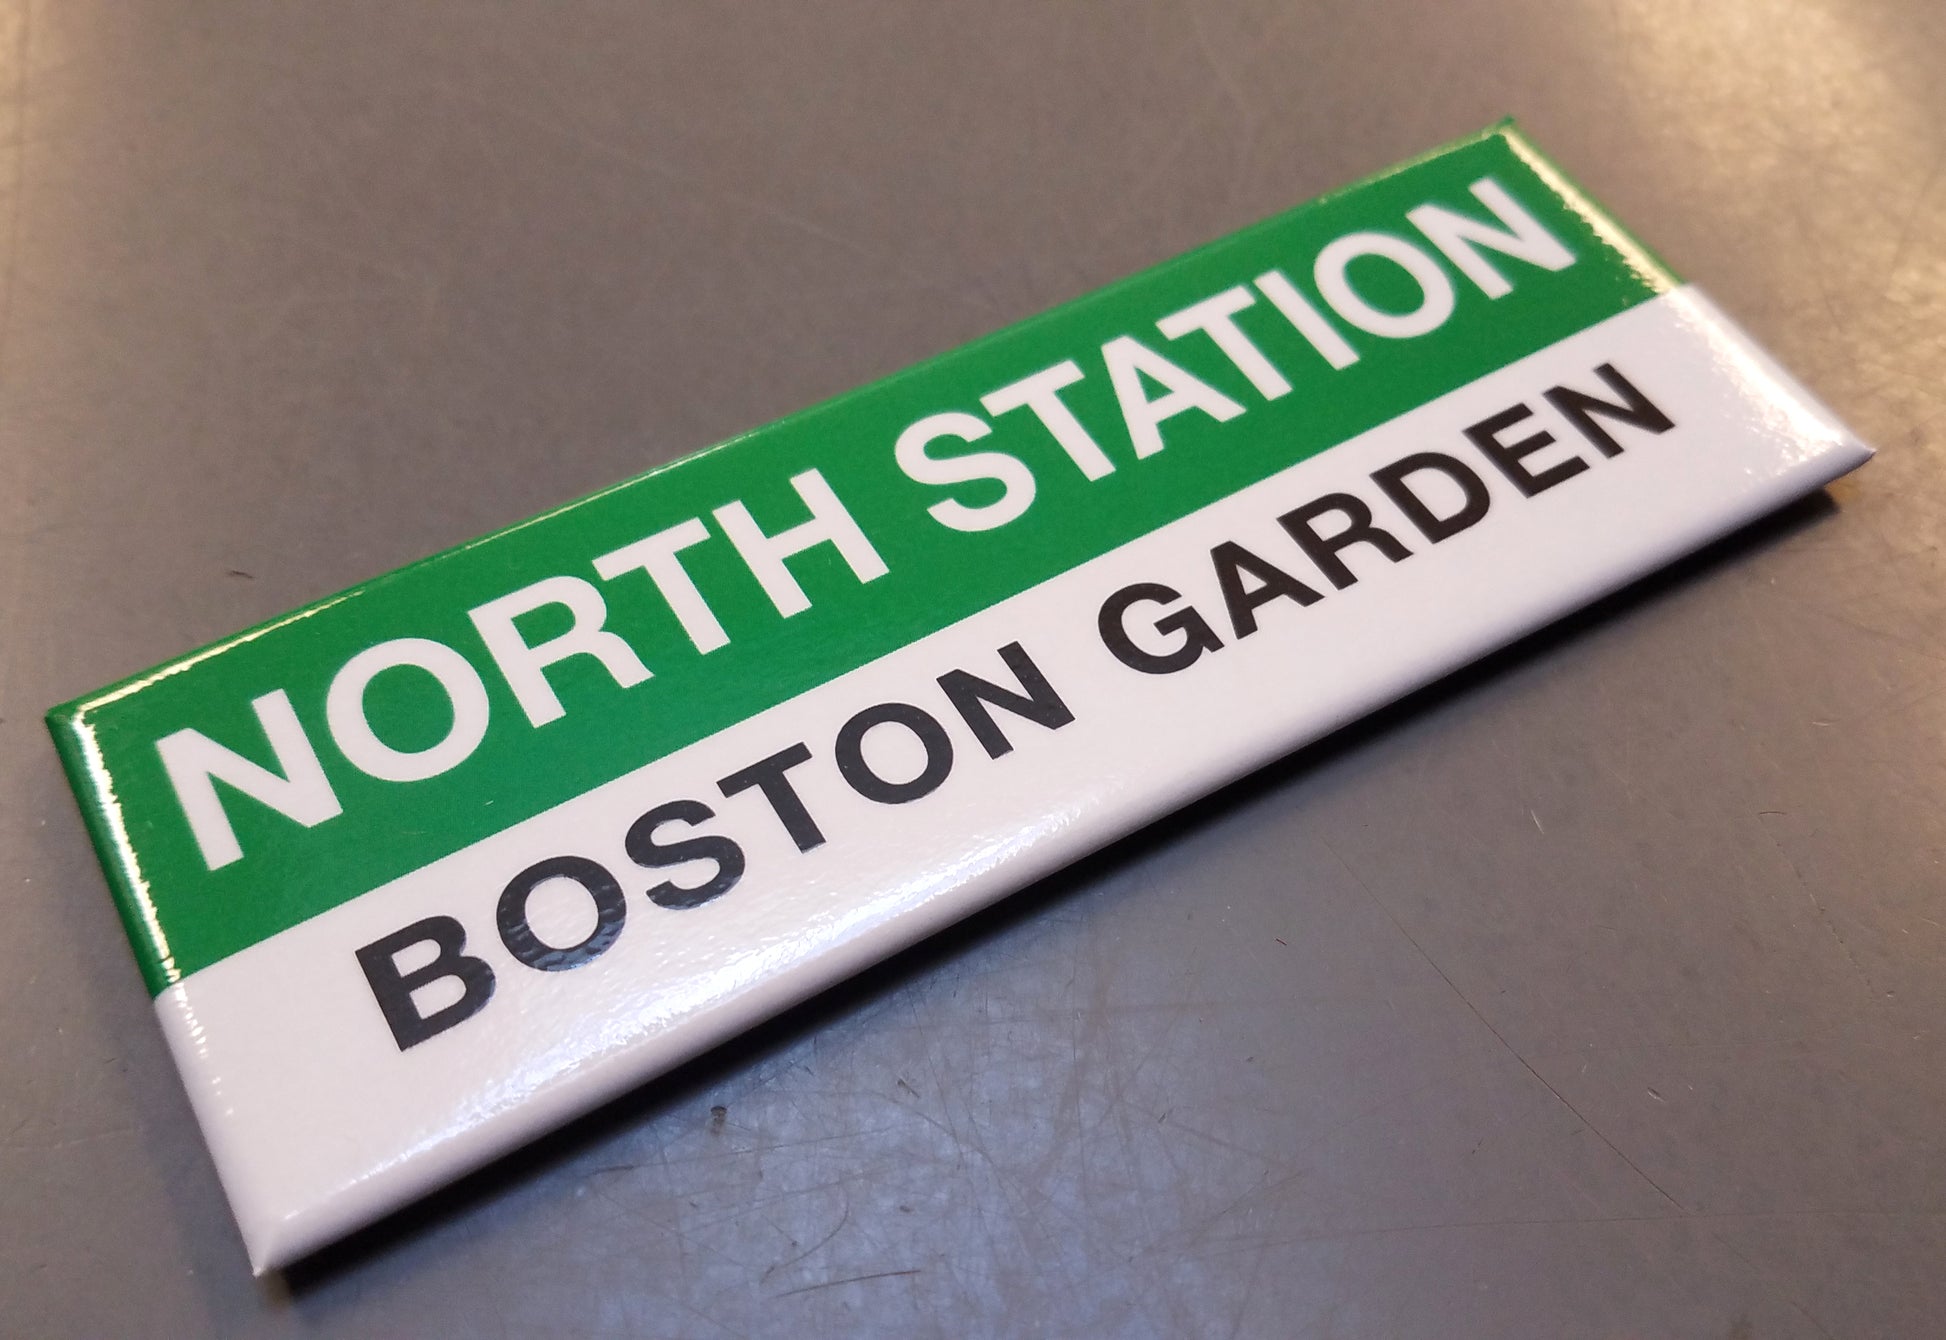 Green Line Station Magnet: North Station; Boston Garden